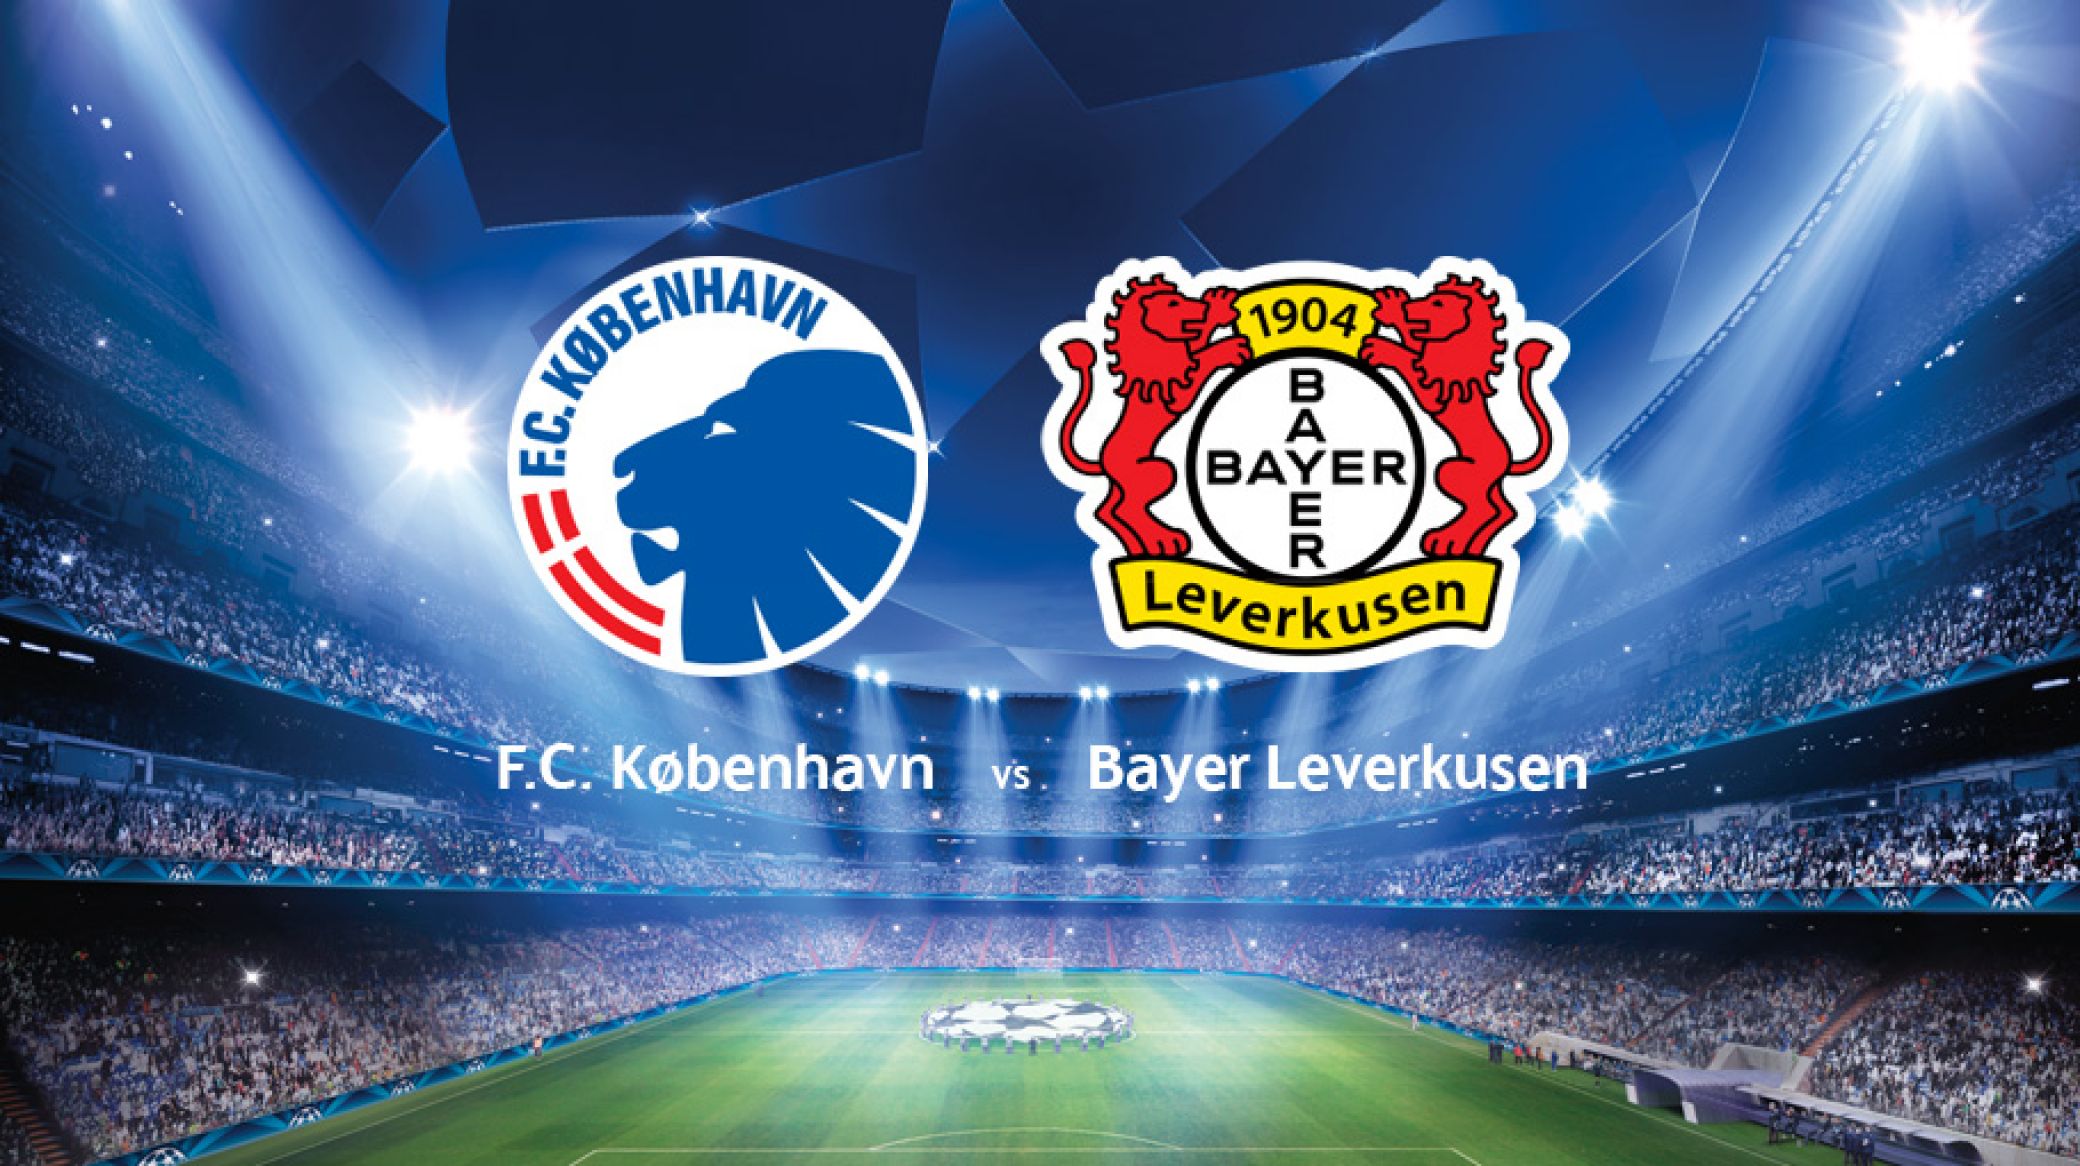 F.C. København vs. Bayer Leverkusen: Billetinfo